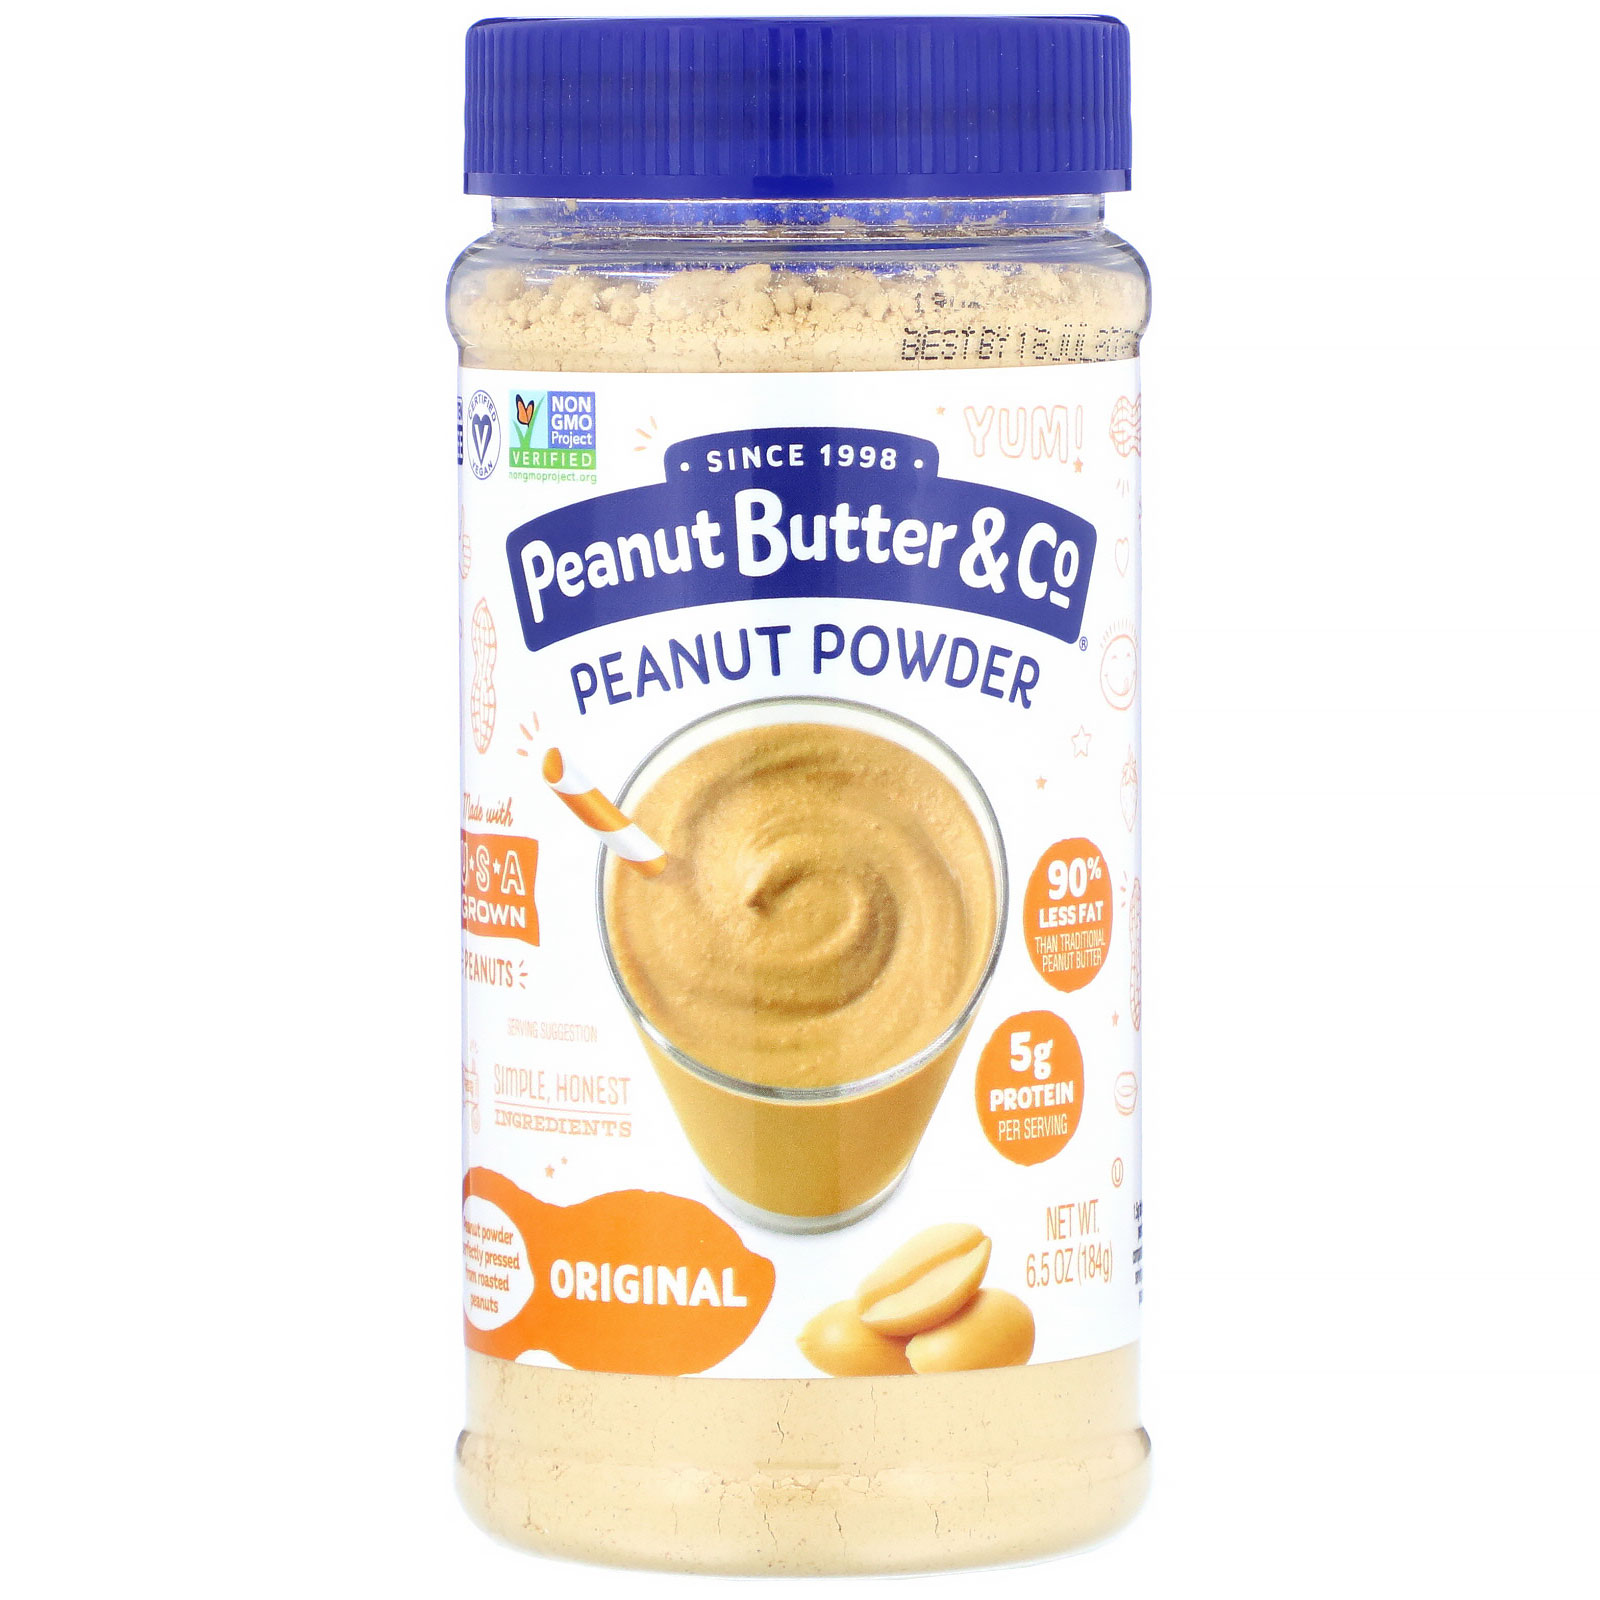 Peanut Butter Co. 無料サンプルOK ピーナッツパウダー オリジナル 海外輸入 184g 6.5オンス